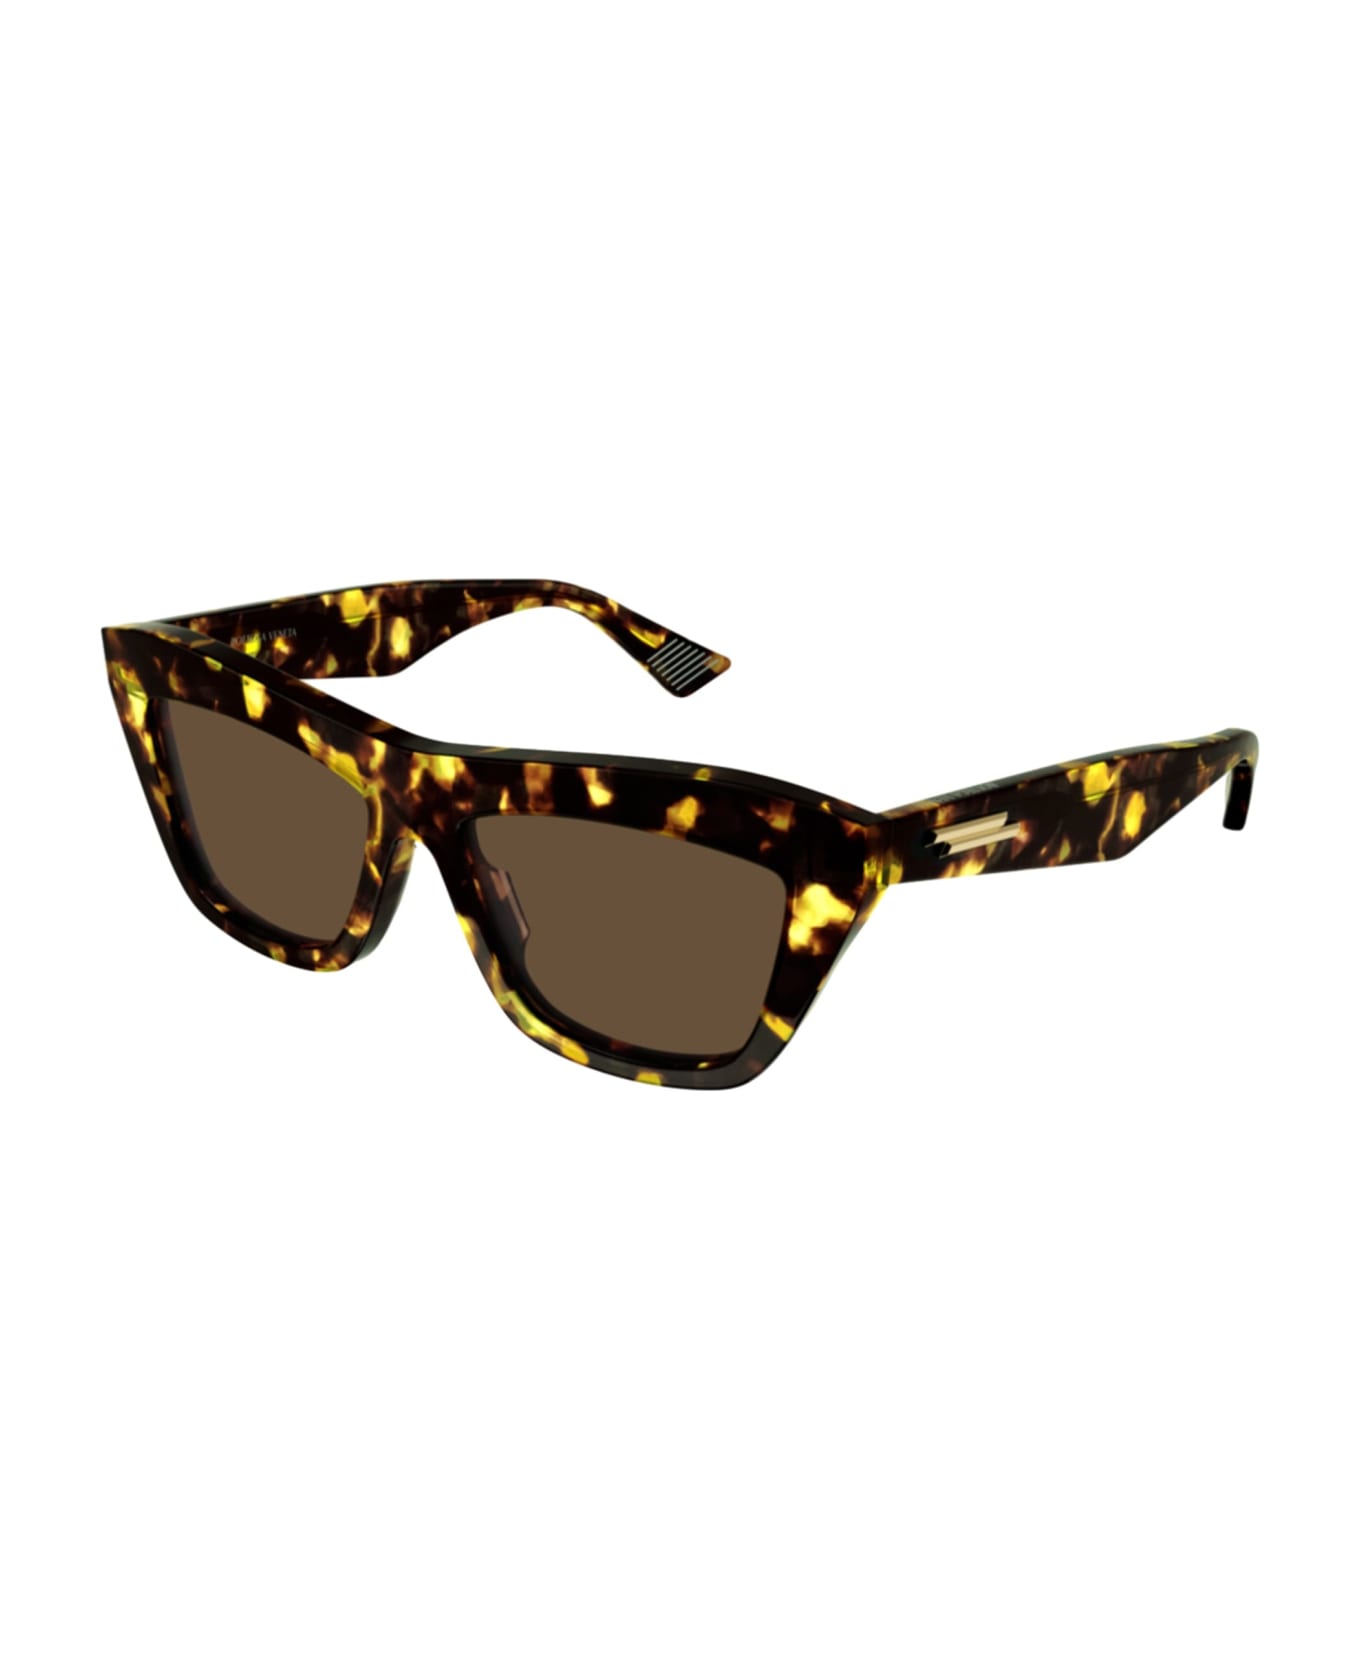 Bottega Veneta Eyewear Bv1121s-002 - Havana Sunglasses - Havana サングラス